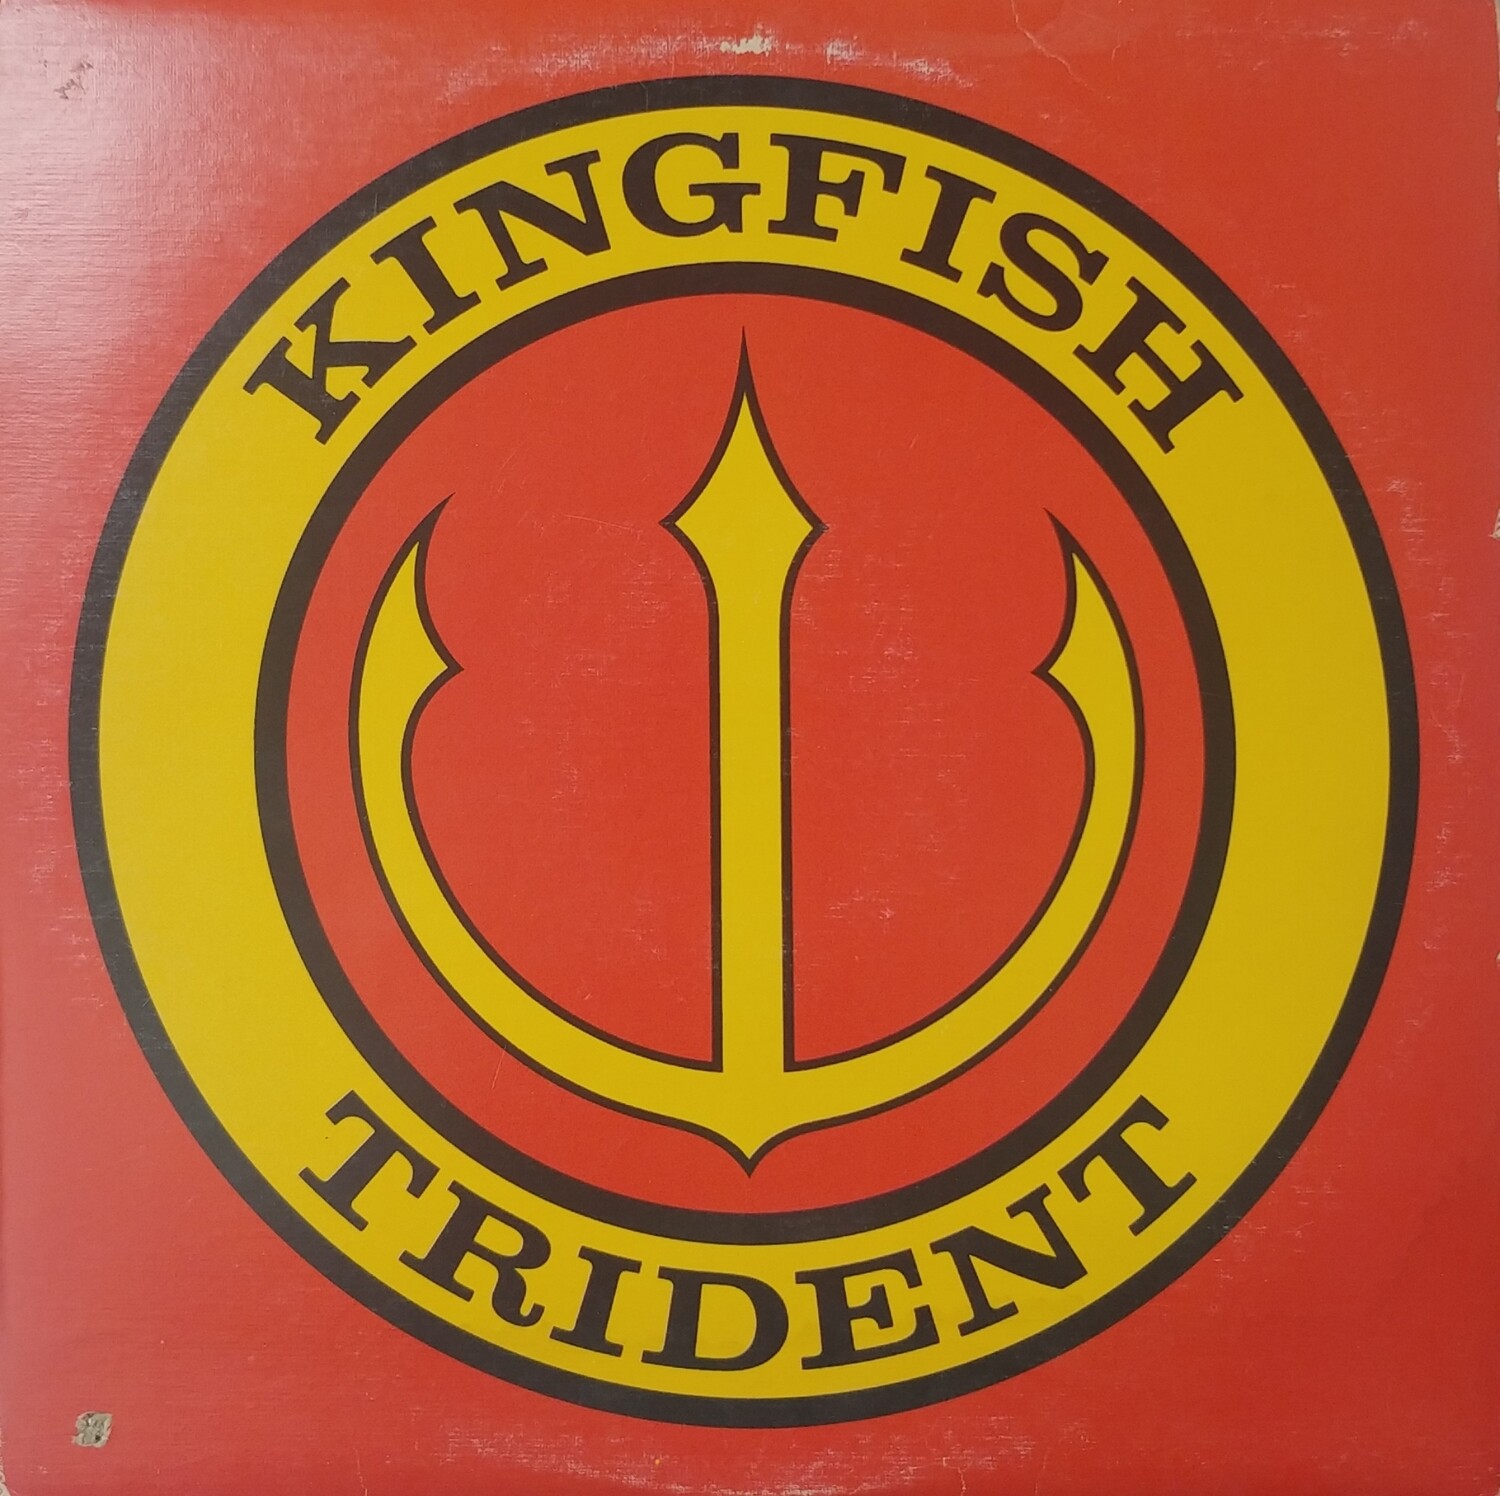 Kingfish - Trident